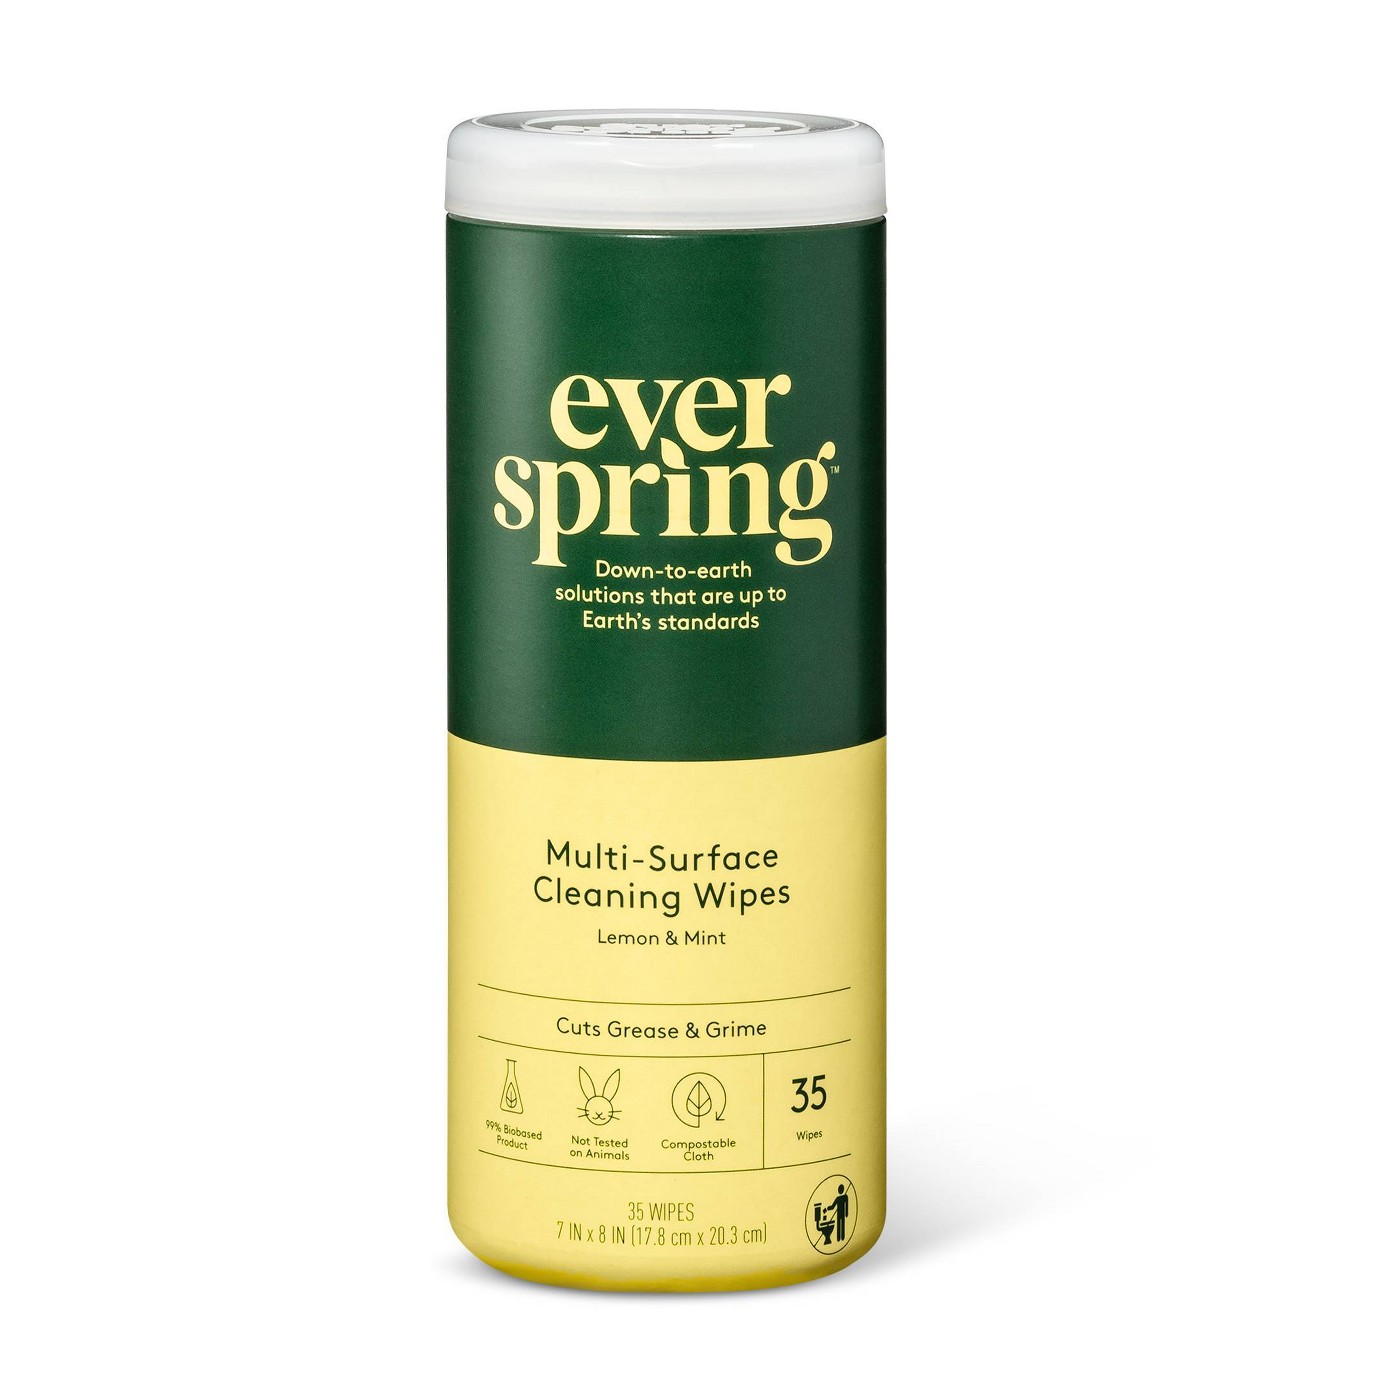 Everspring Packaging — Brad Norr Design